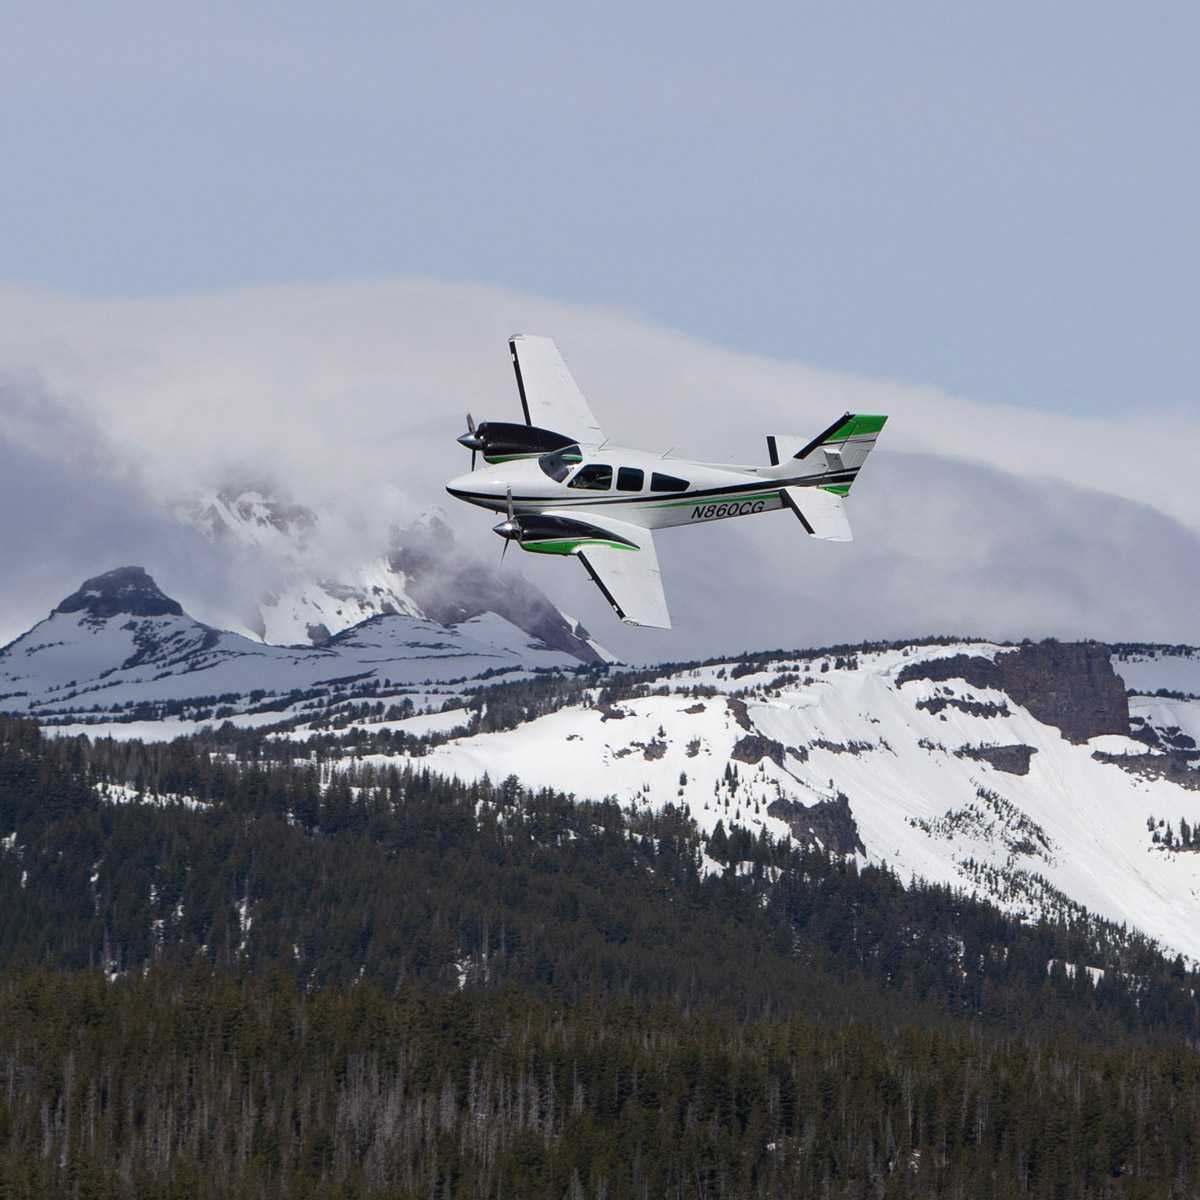 Leading Edge plane over snowy mountains